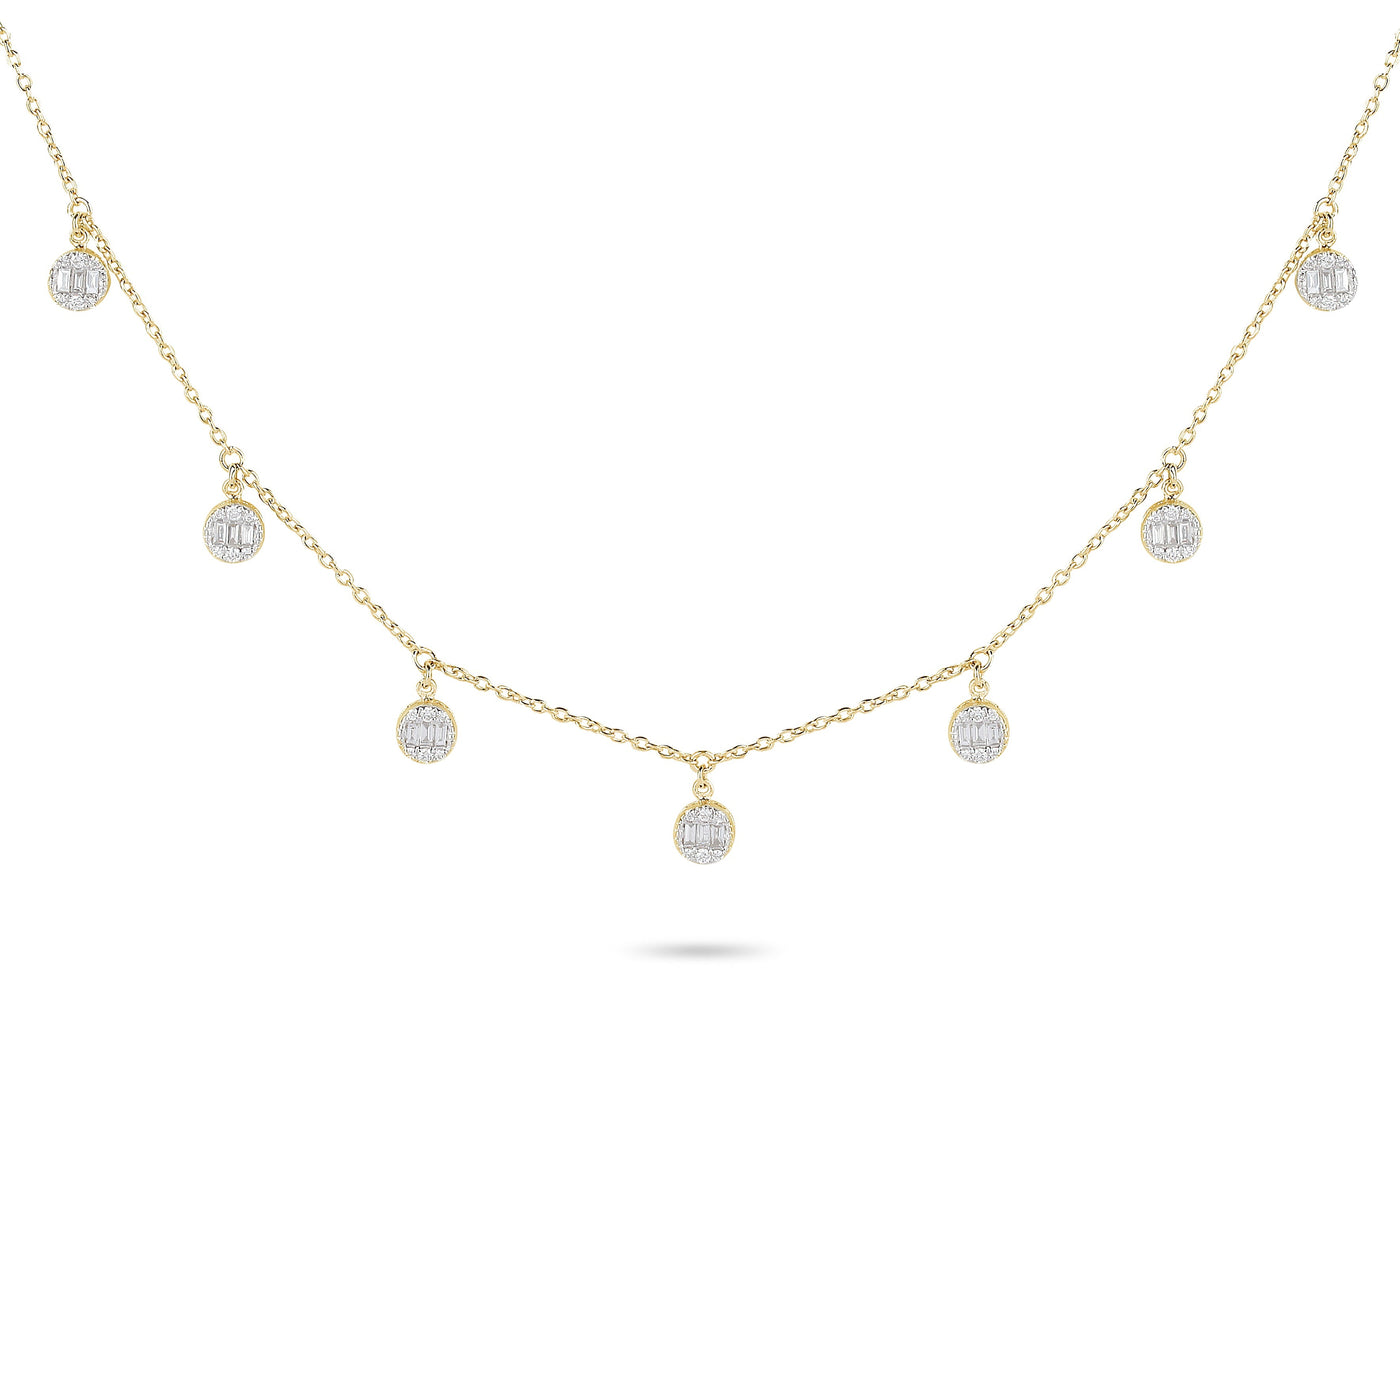 Yessayan 18K Yellow Gold Diamond Illusion Charm Necklace